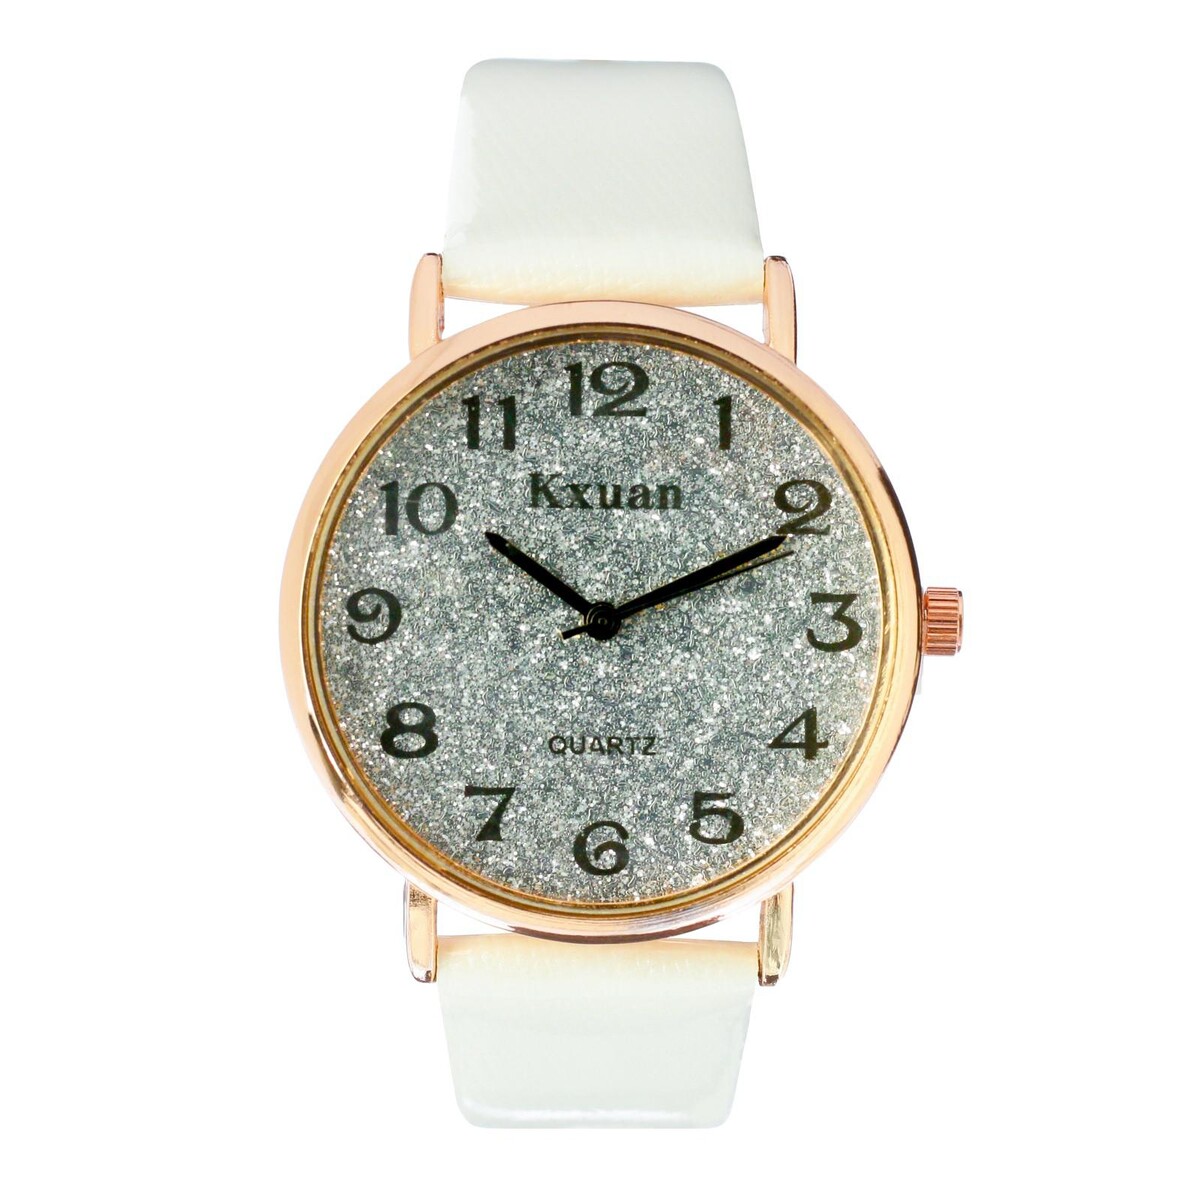 Часы наручные кварцевые женские kxuan, d-3.5 см, белые